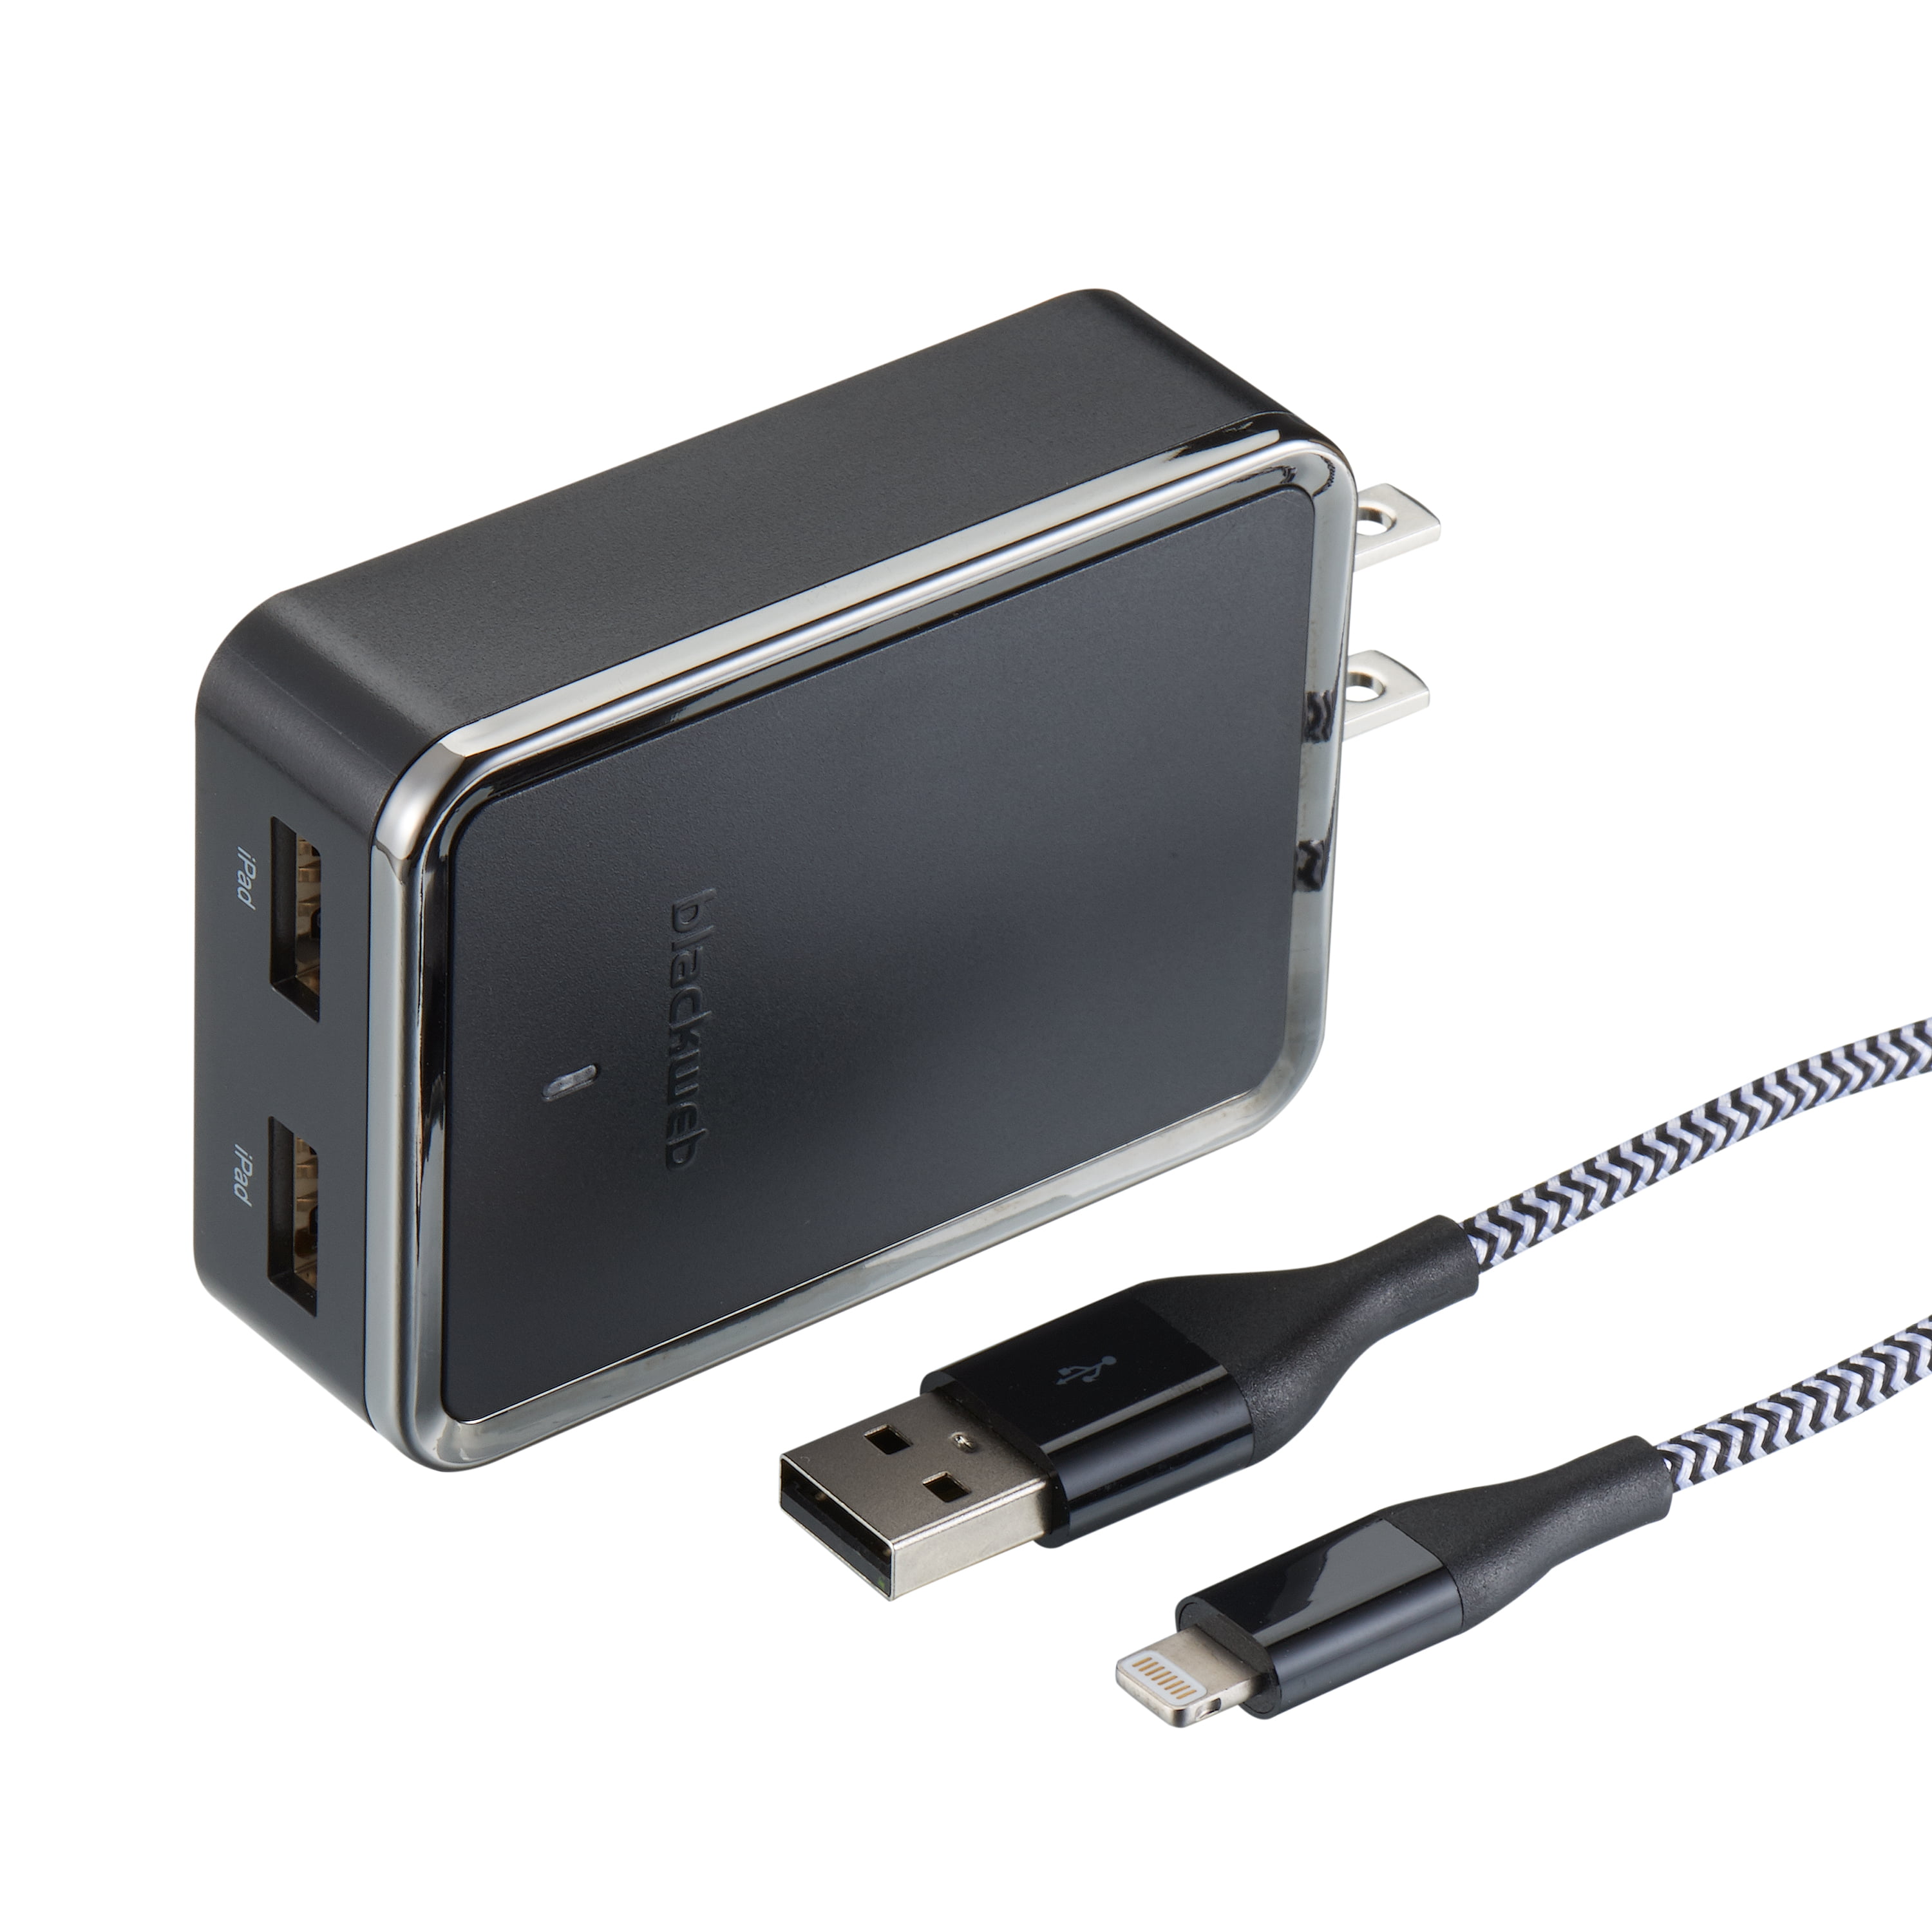 Blackweb 4.8 Amp Dual Port USB Wall Charger, Black - Walmart.com ...